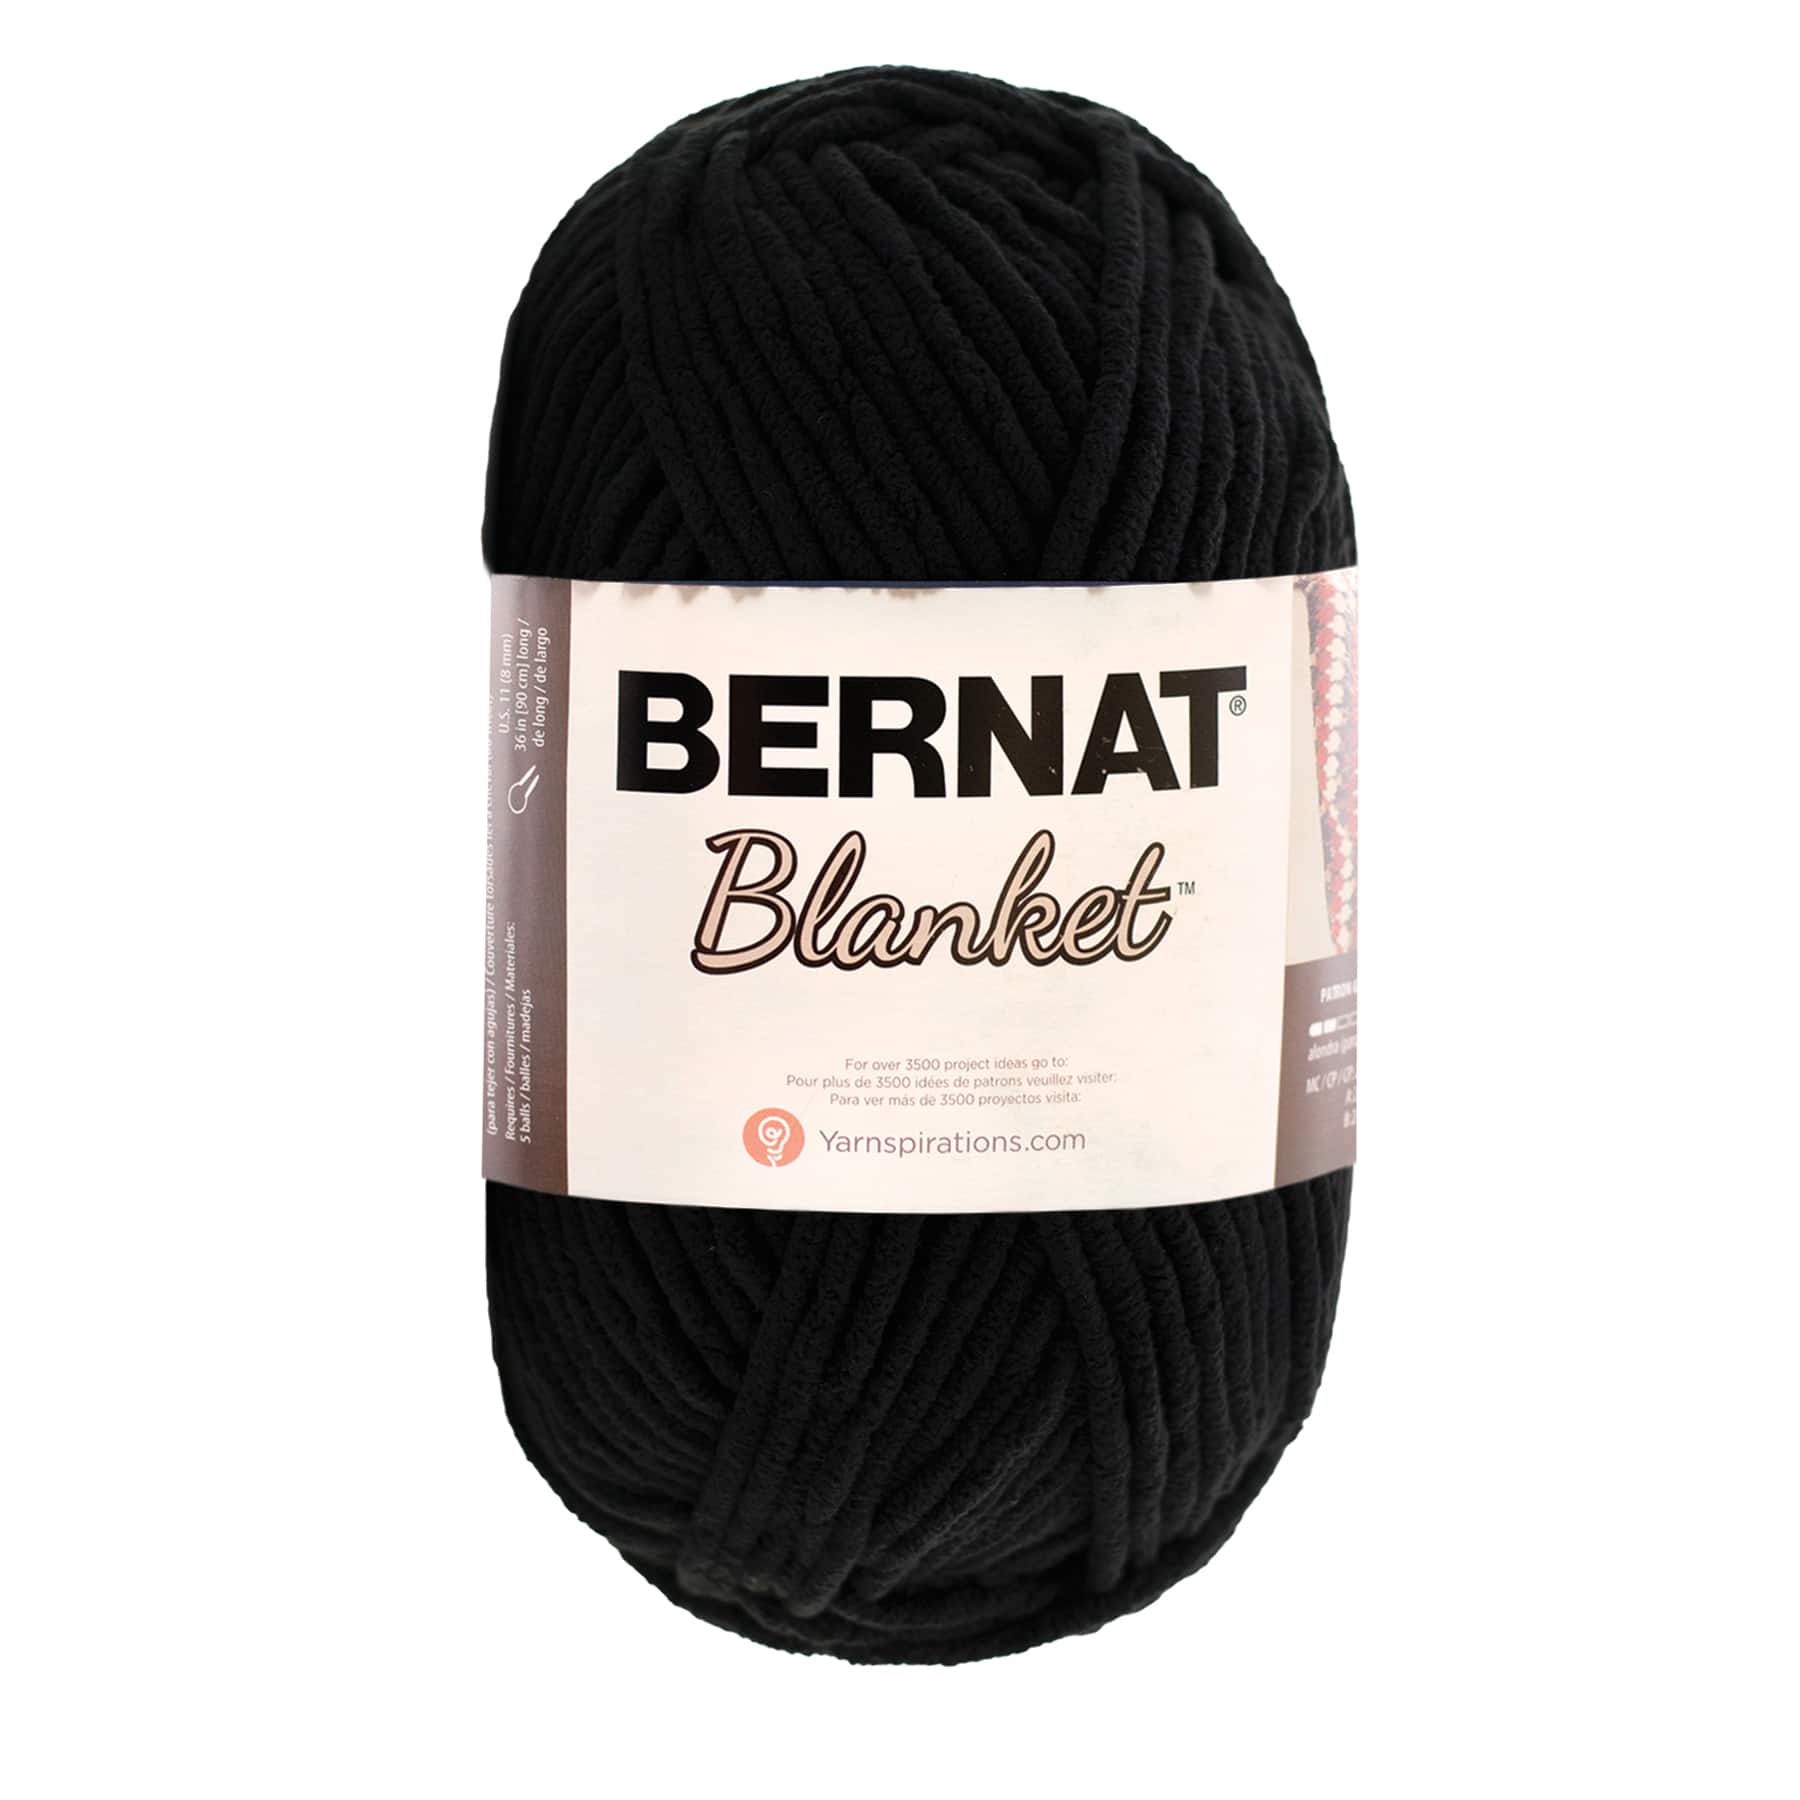 Bernat Blanket Big Ball Lot of 4 Yarn Skeins Brown Blue Mallard Wood